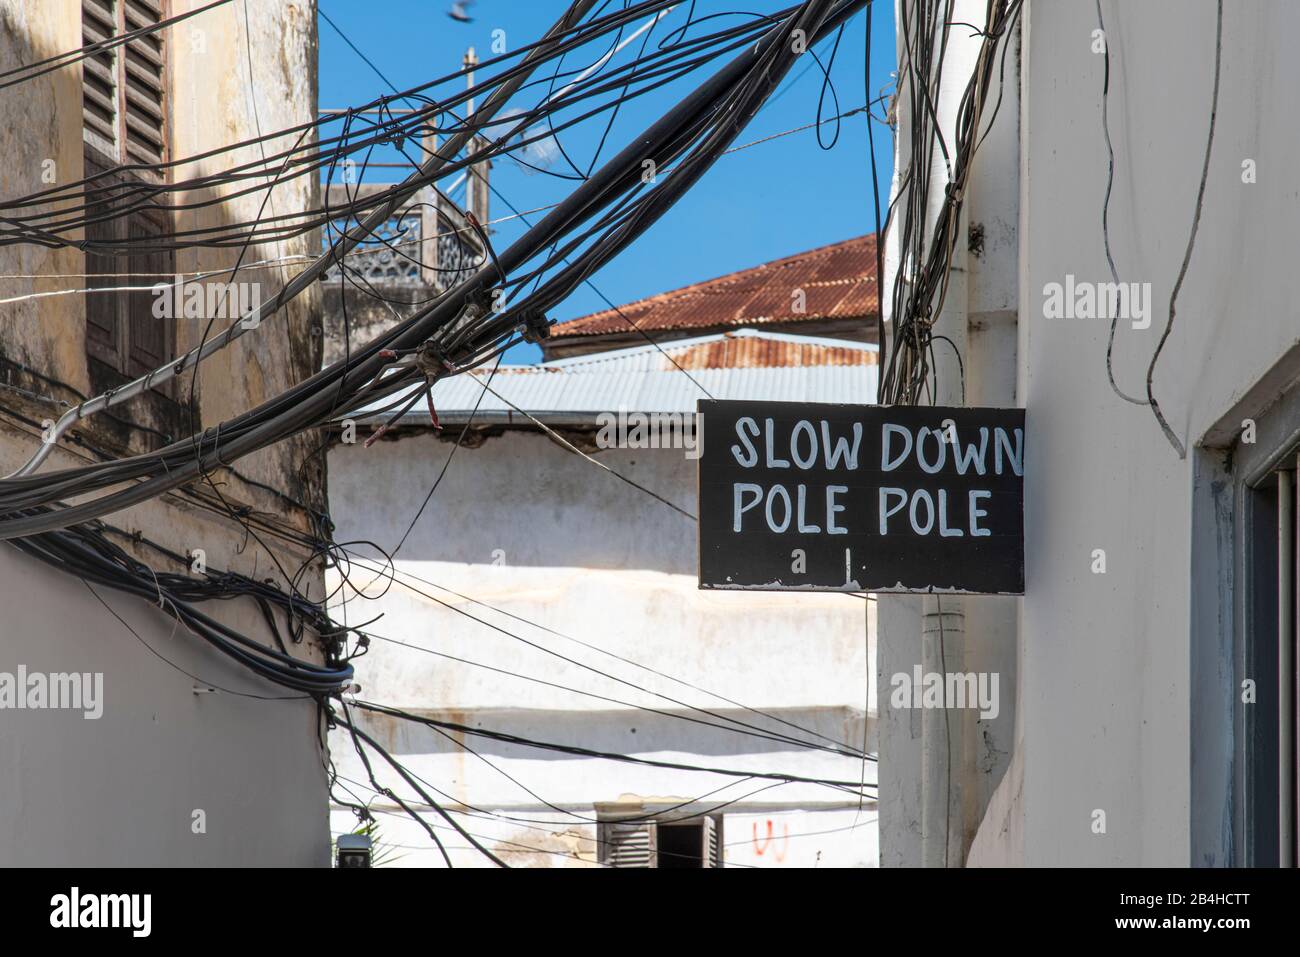 Destination Tanzania, Zanzibar Island: Impressions from Stone Town. "Pole pole" slow down signs in the streets. Stock Photo